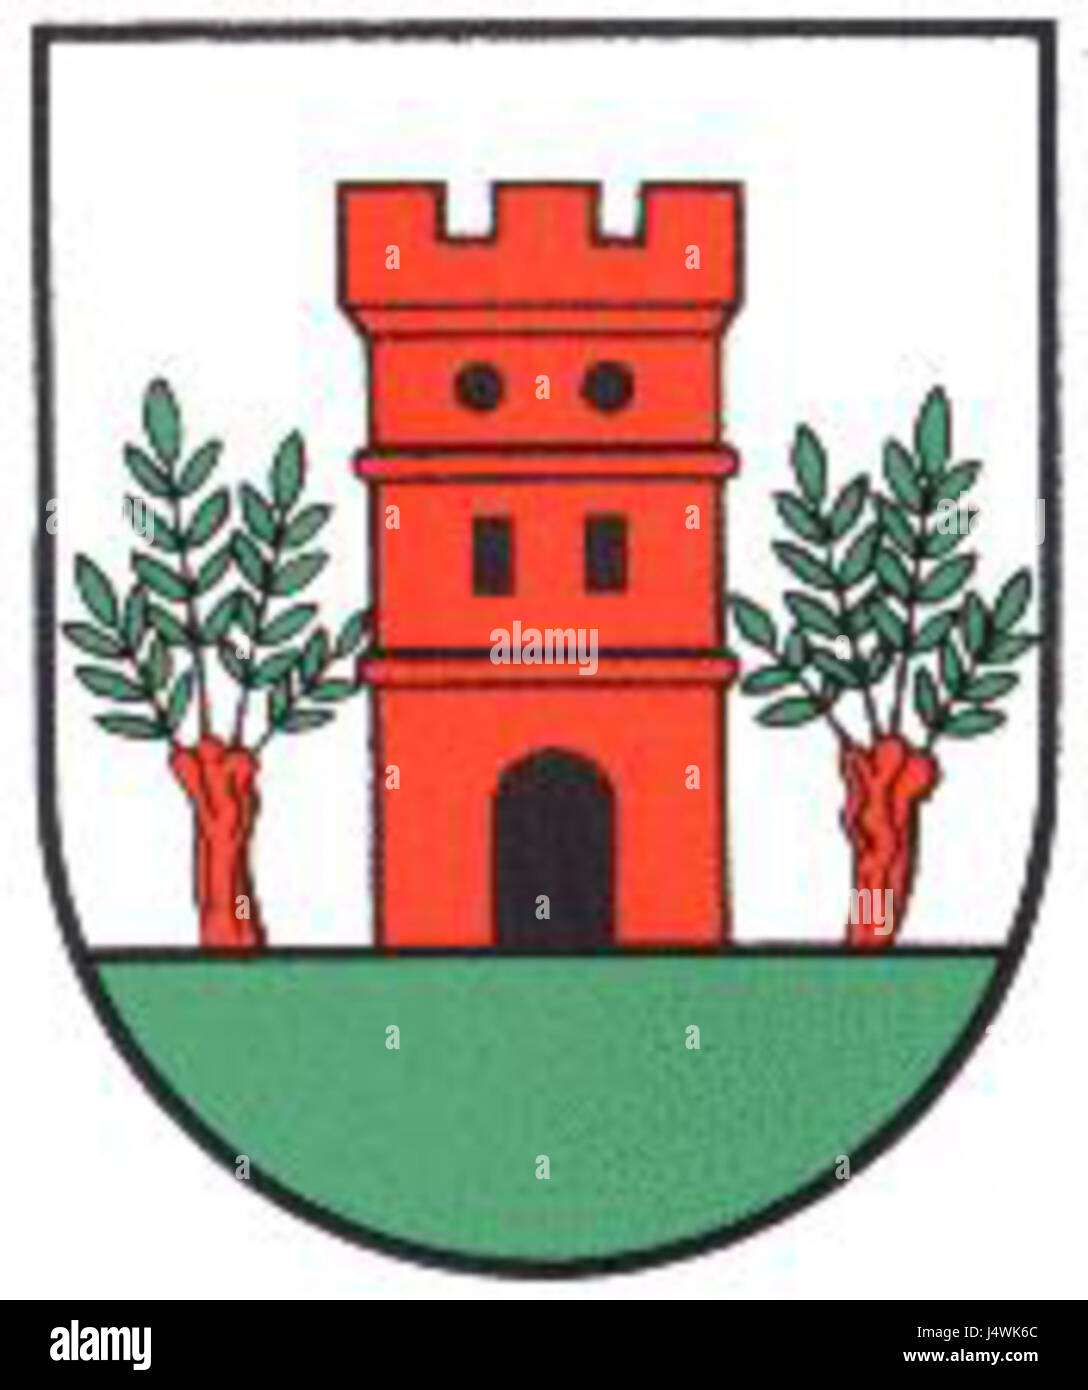 Wappen at weitersfelden Stock Photo